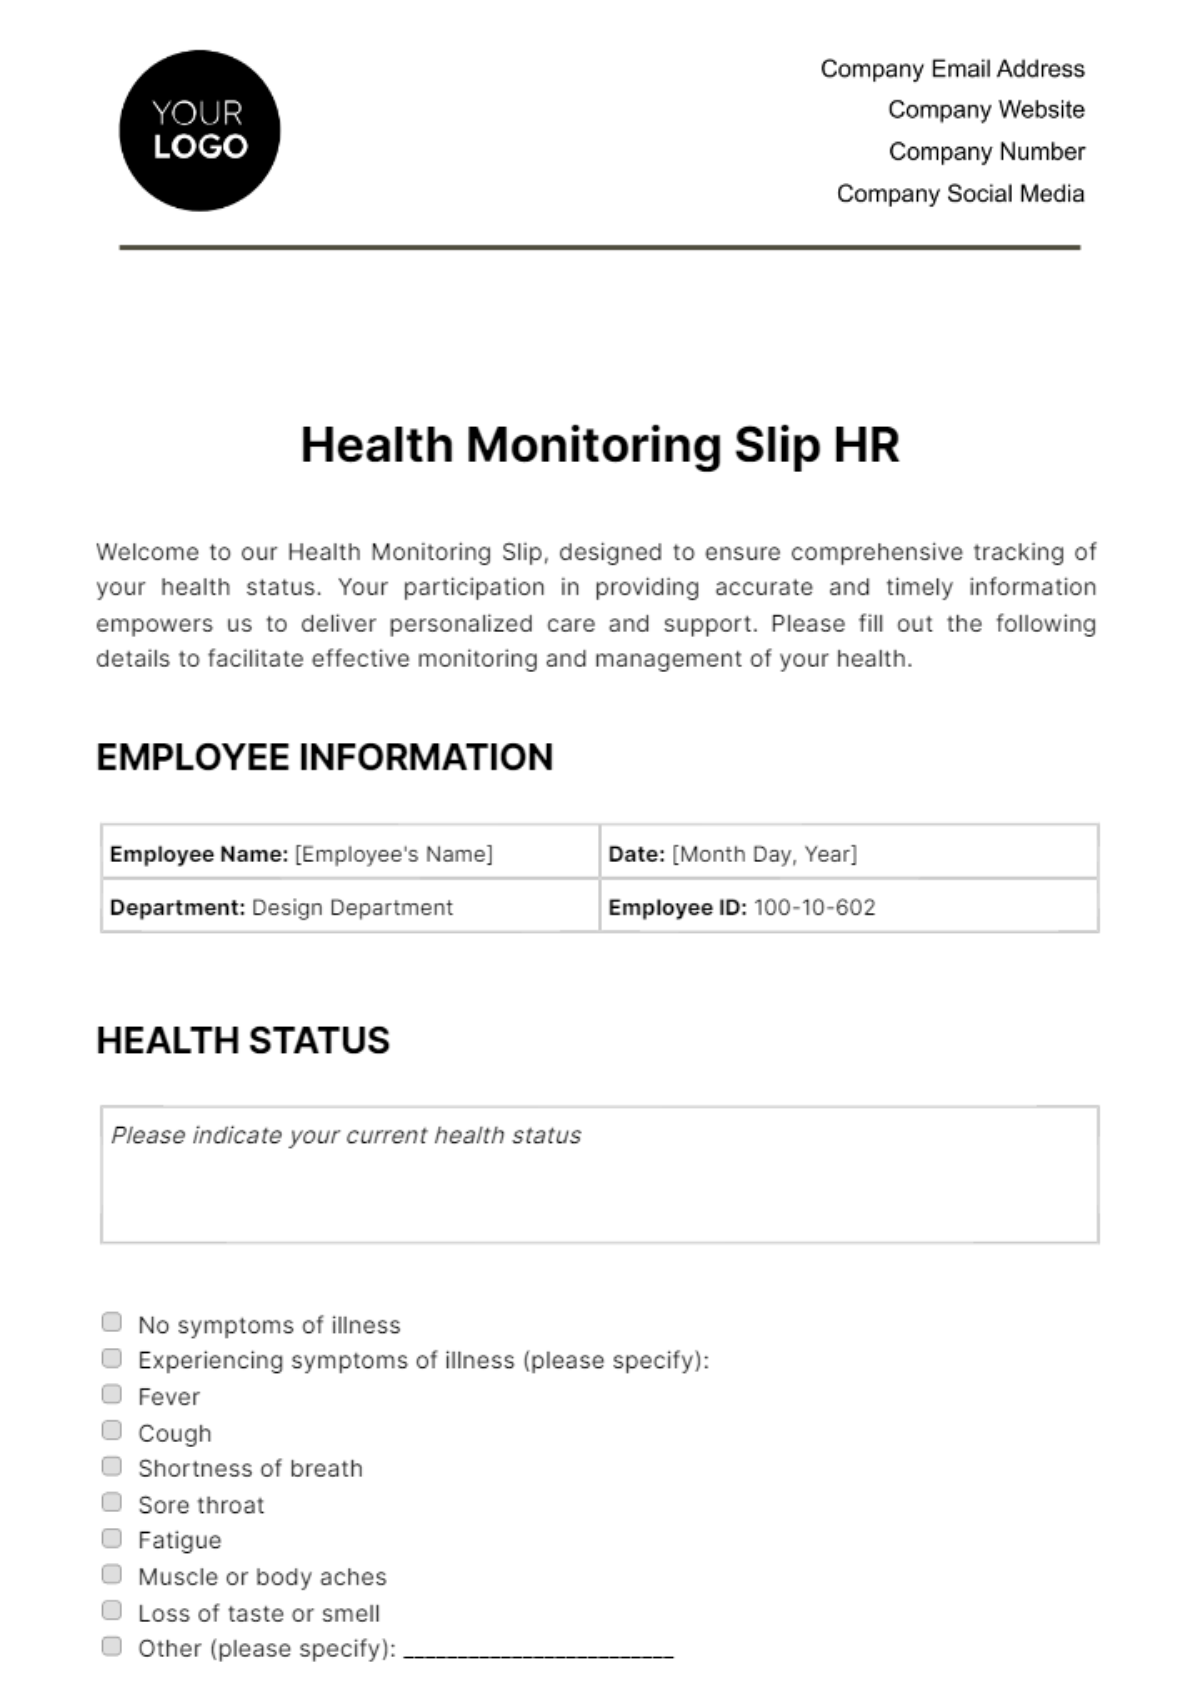 Free Health Monitoring Slip HR Template